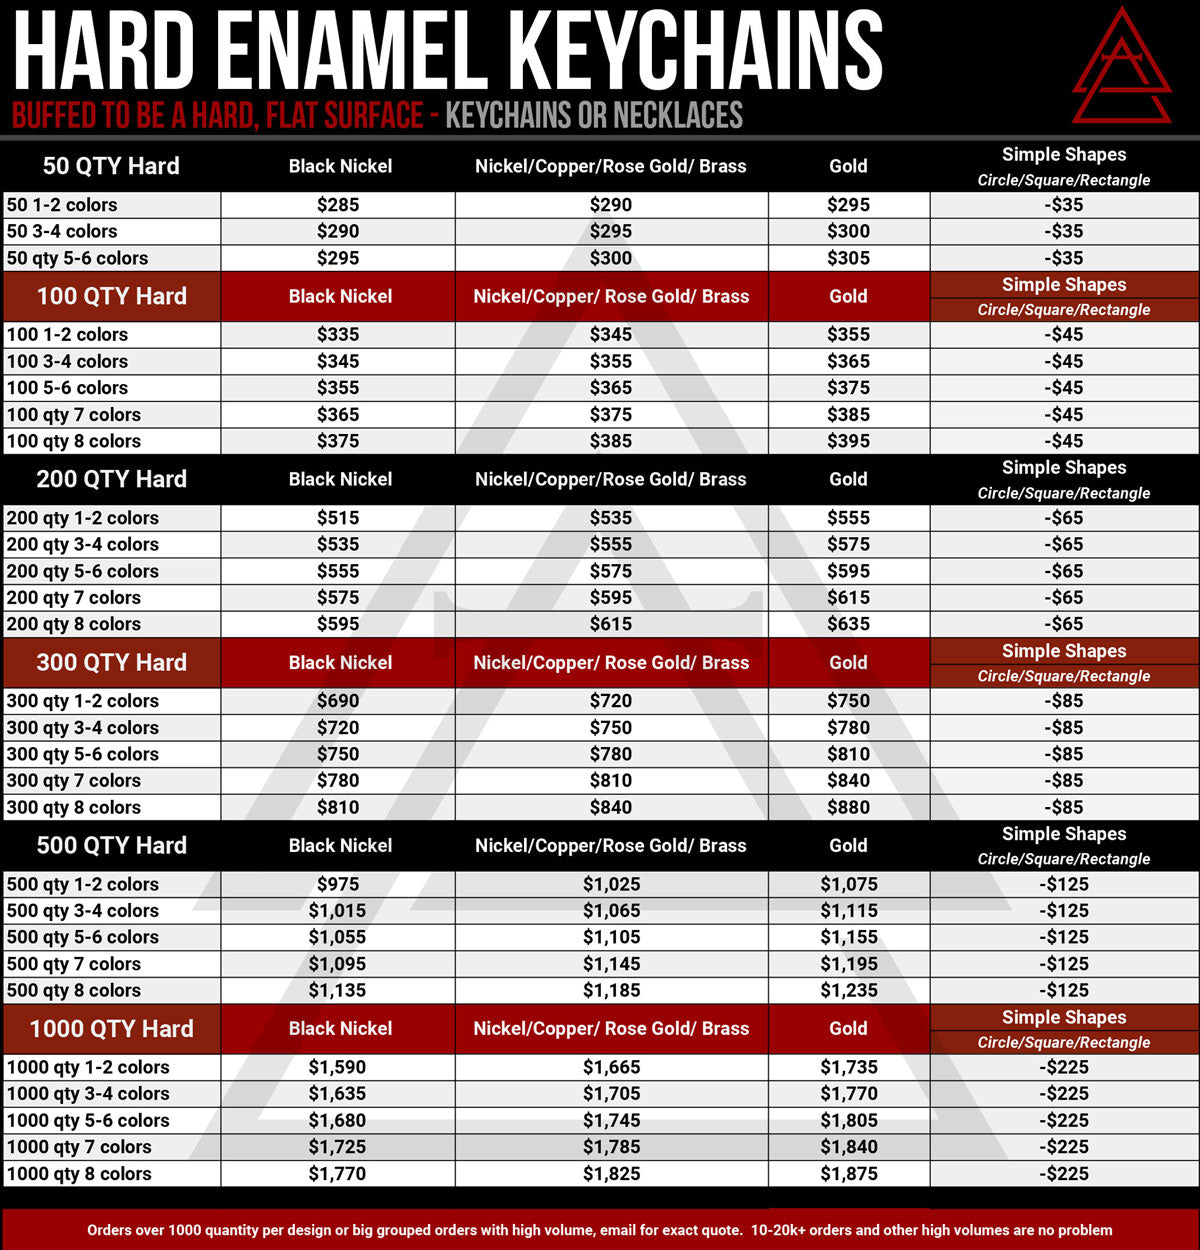 Alchemy Merch - Hard enamel keychain pricing